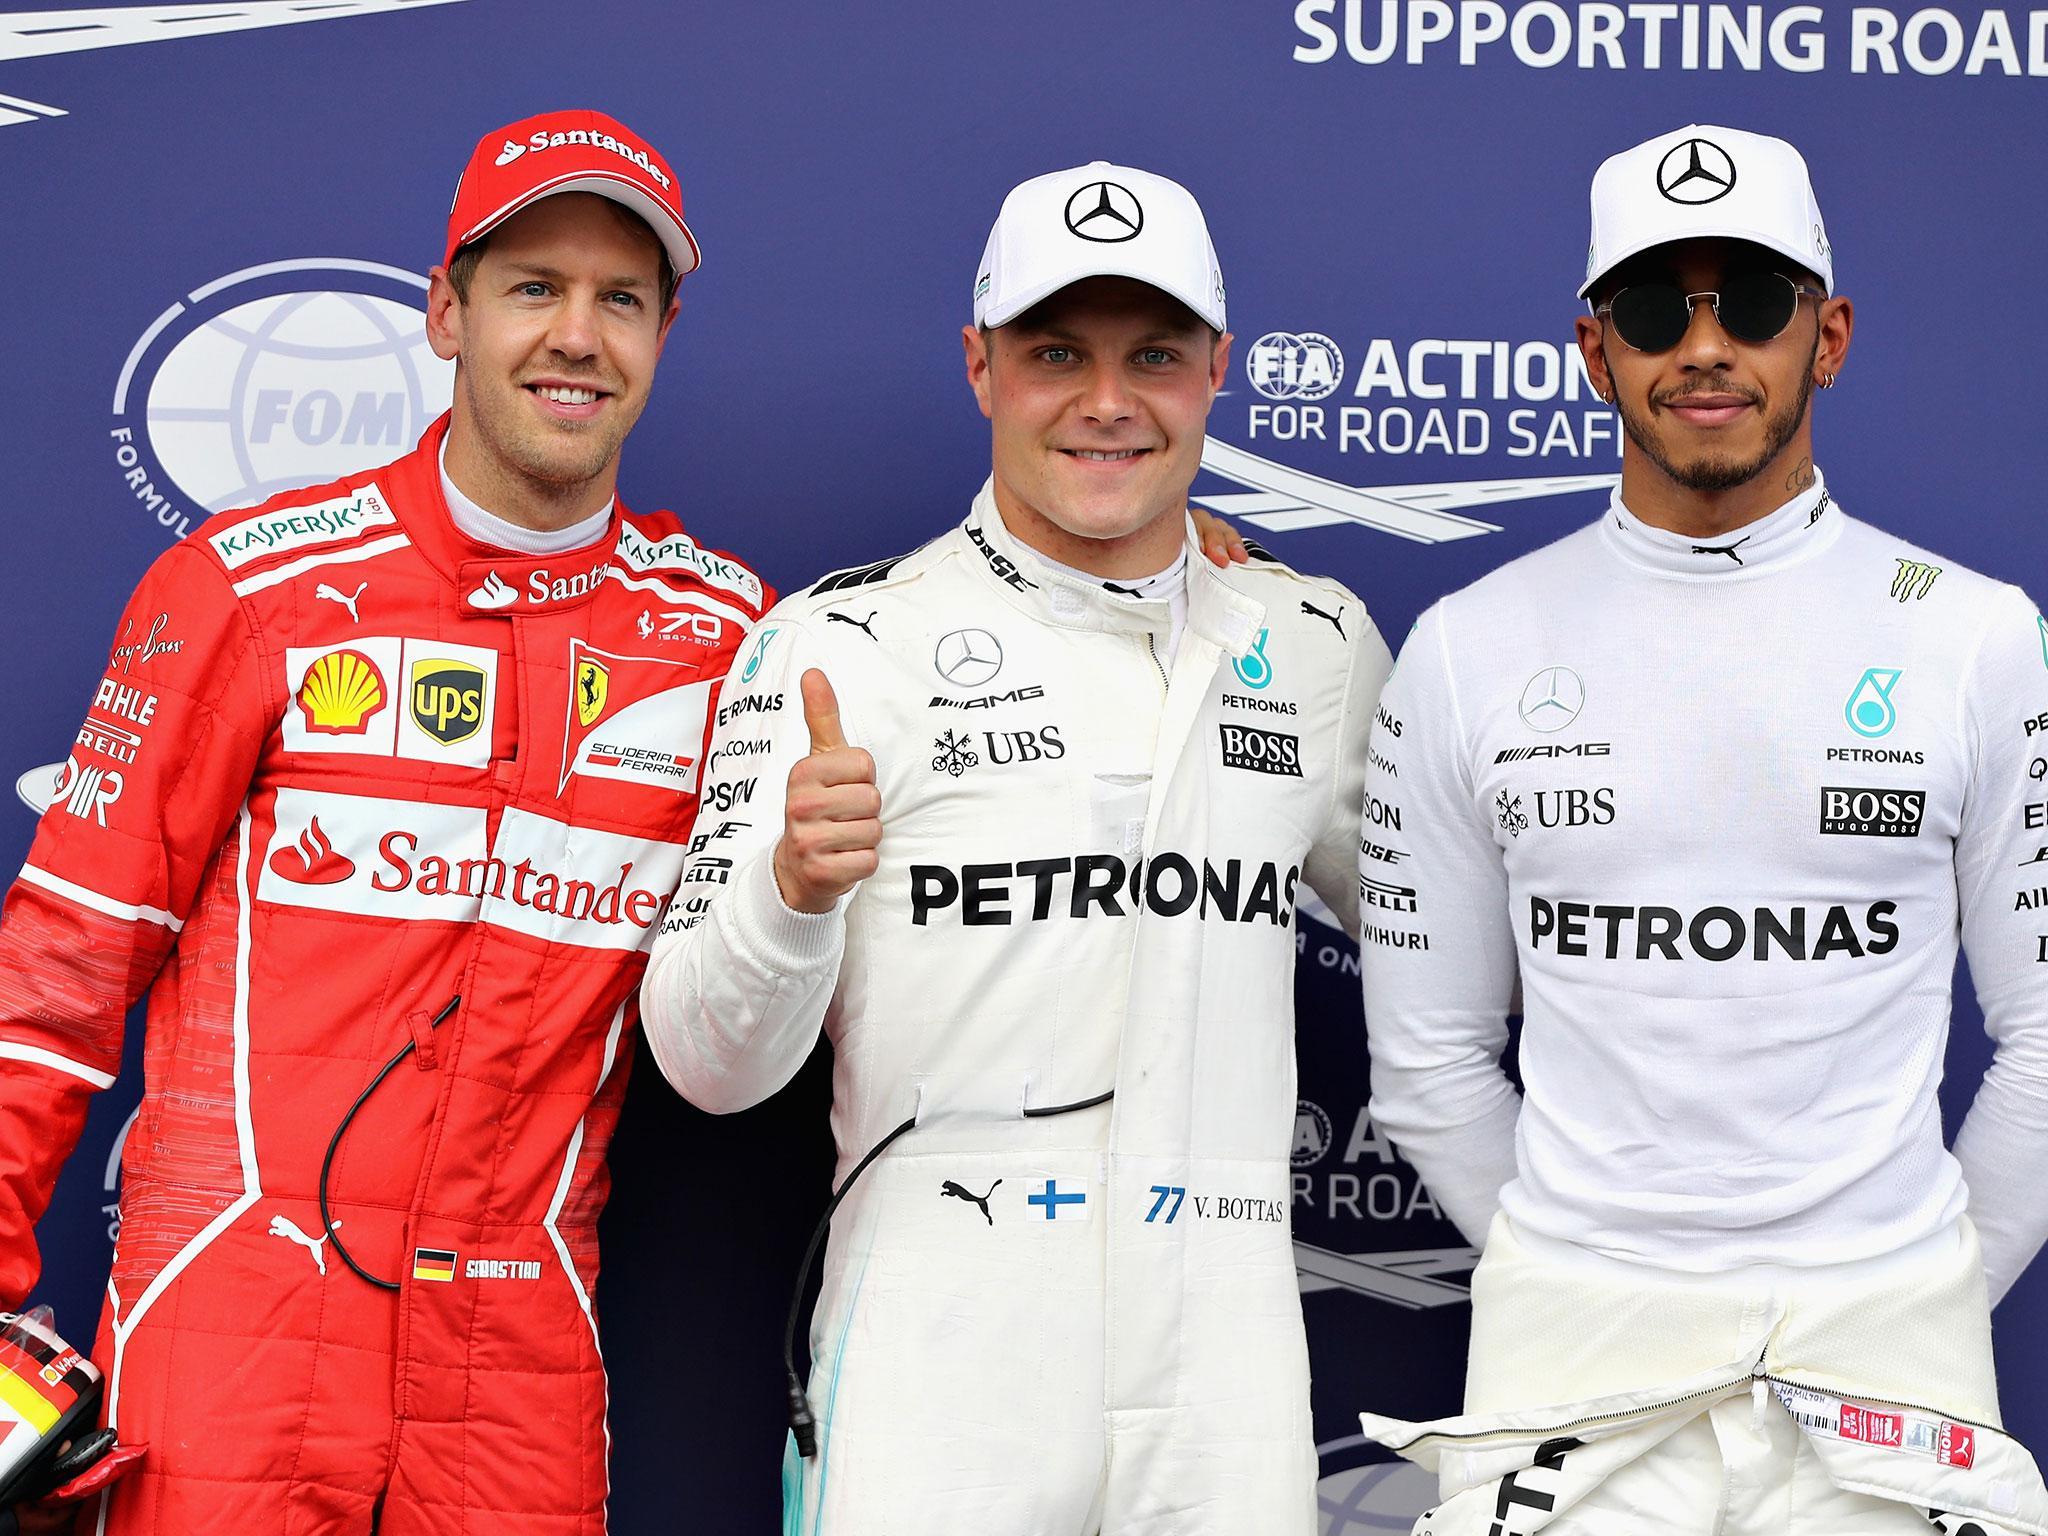 Valtteri Bottas took pole position for Sunday's Austrian Grand Prix